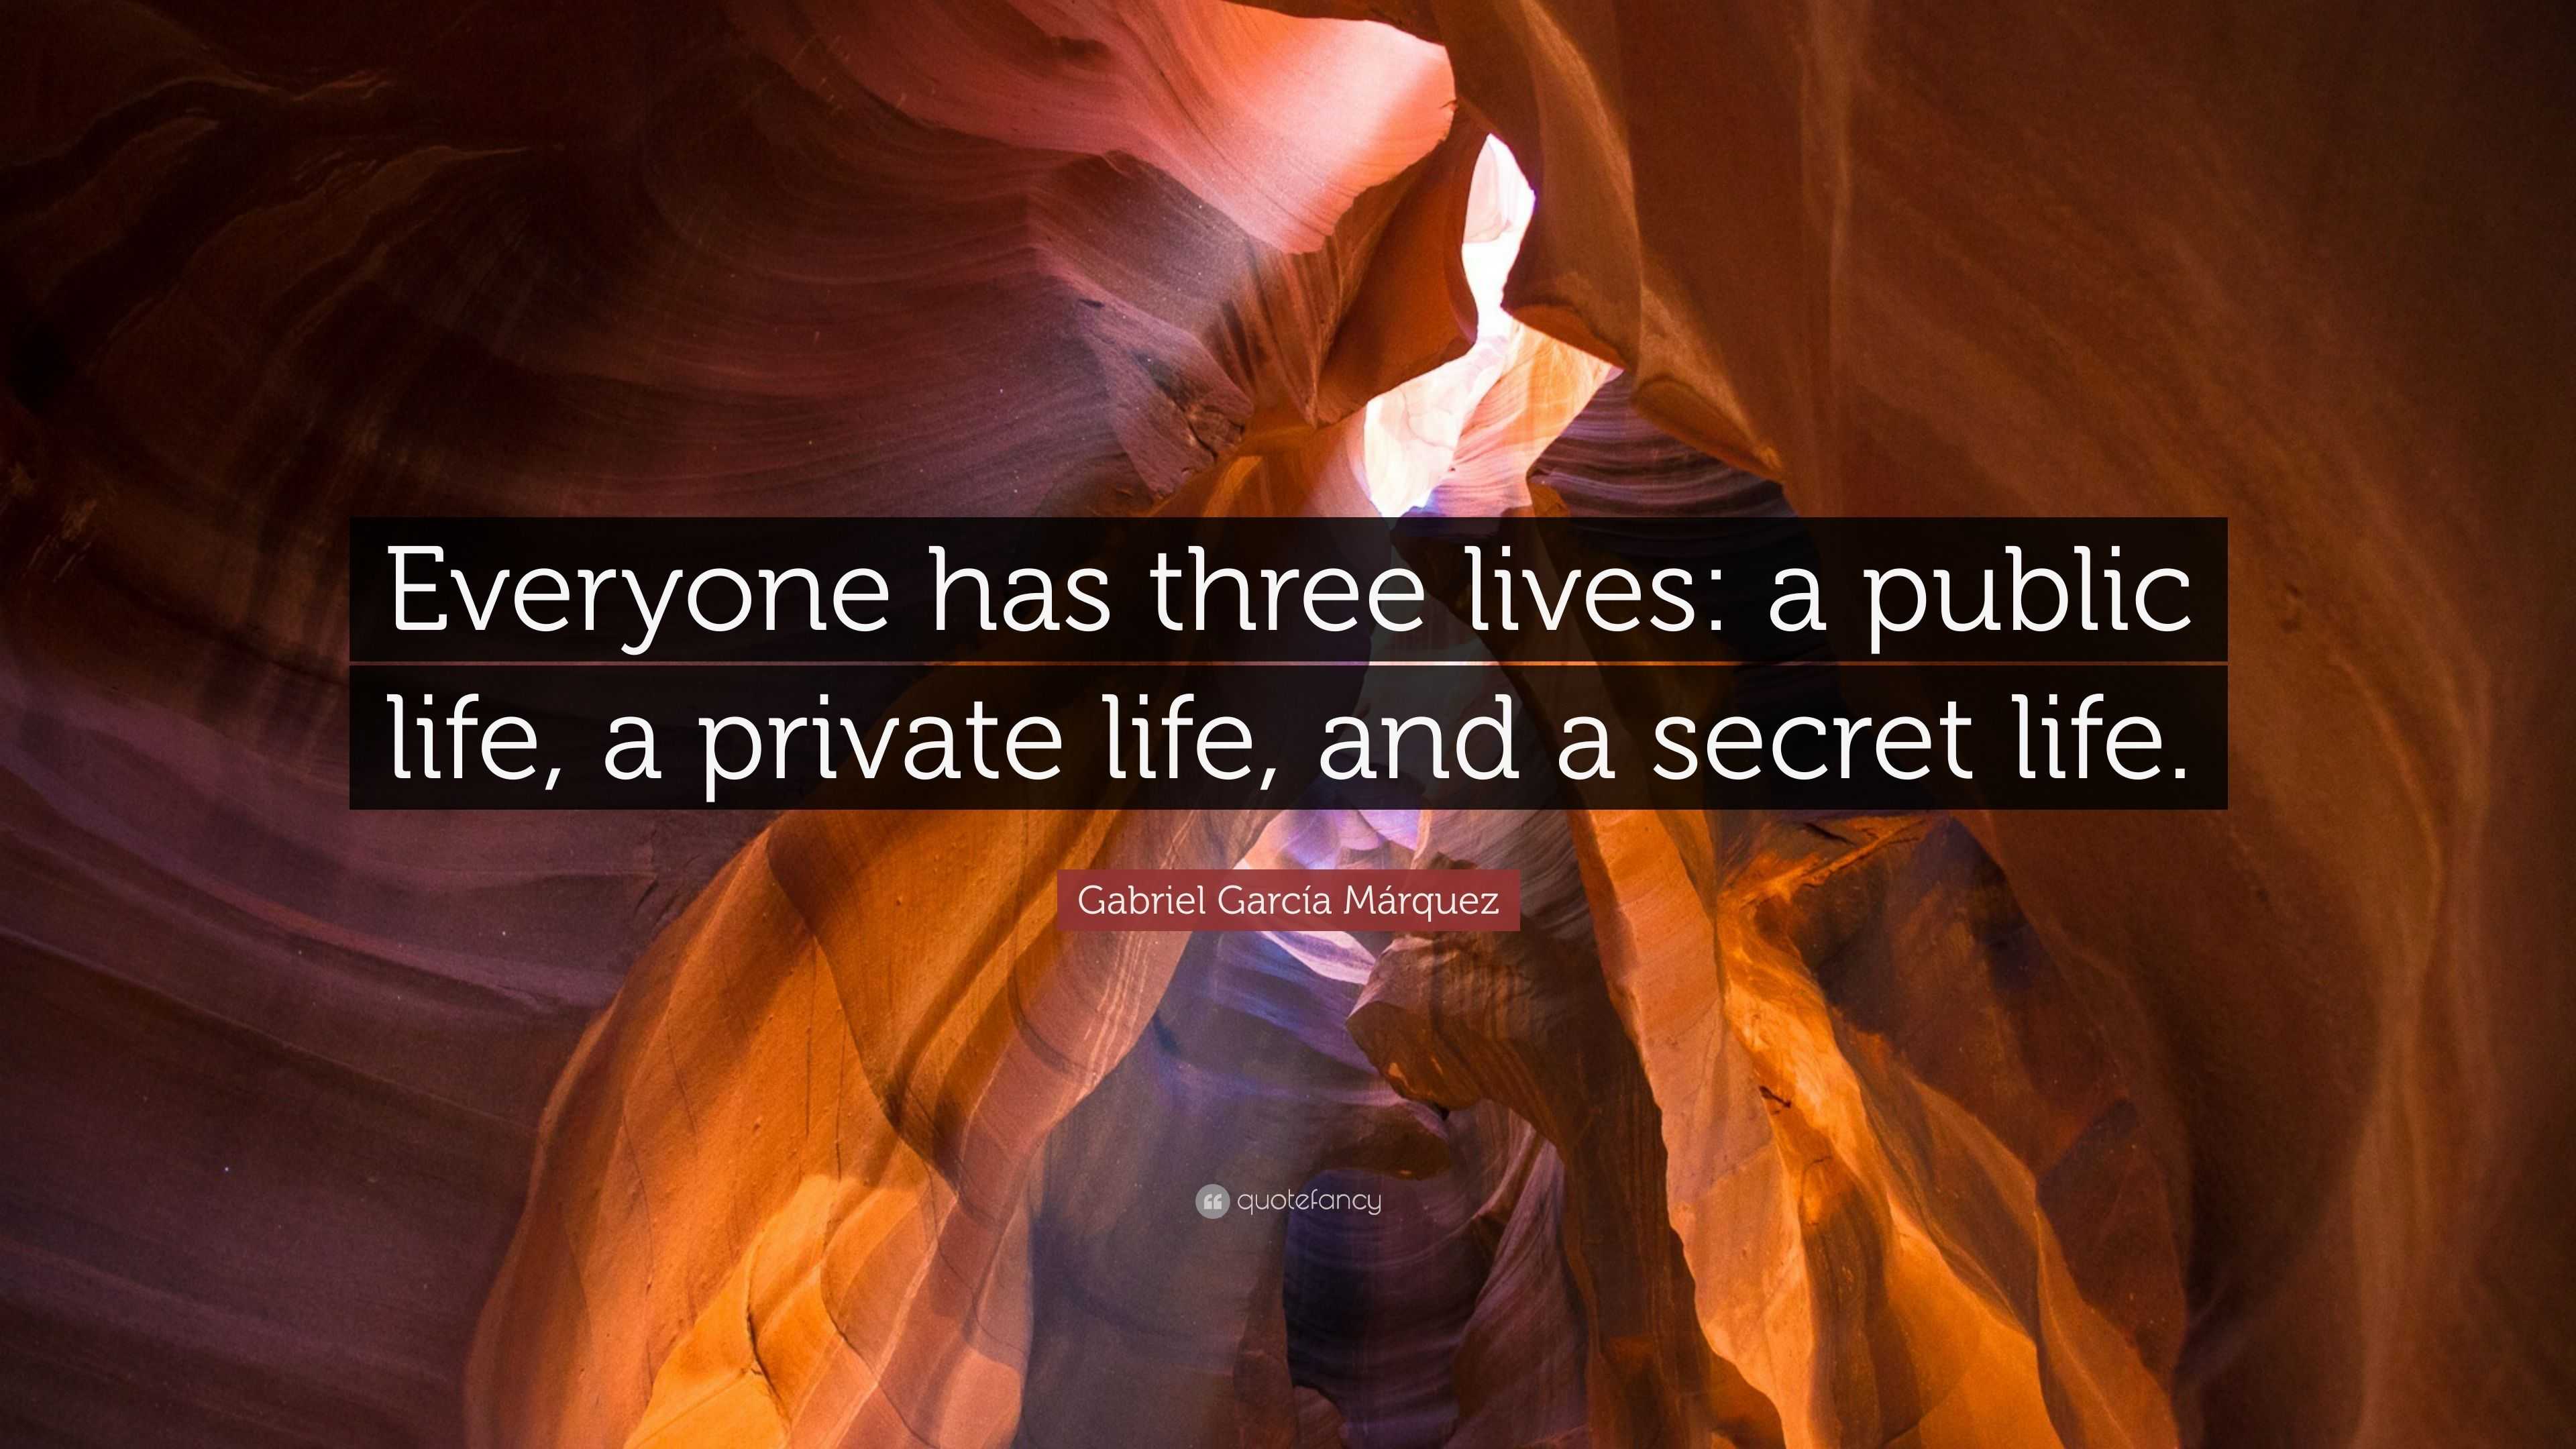 Gabriel Garc­a Márquez Quote “Everyone has three lives a public life a